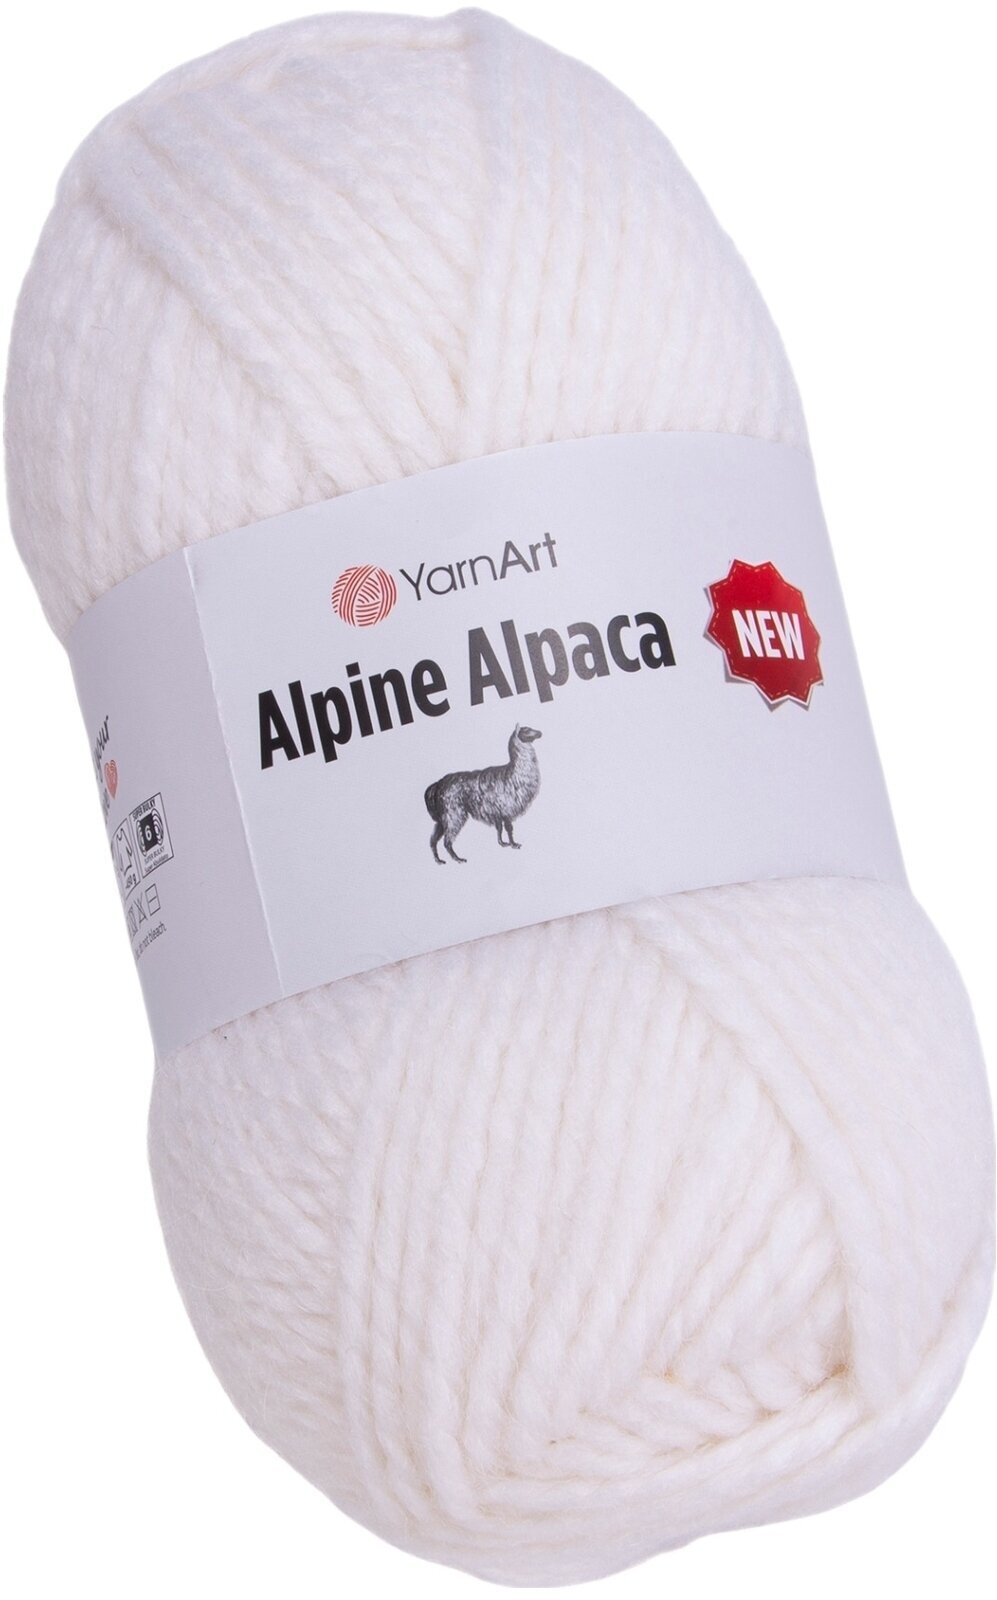 Strikkegarn Yarn Art Alpine Alpaca Strikkegarn 1440